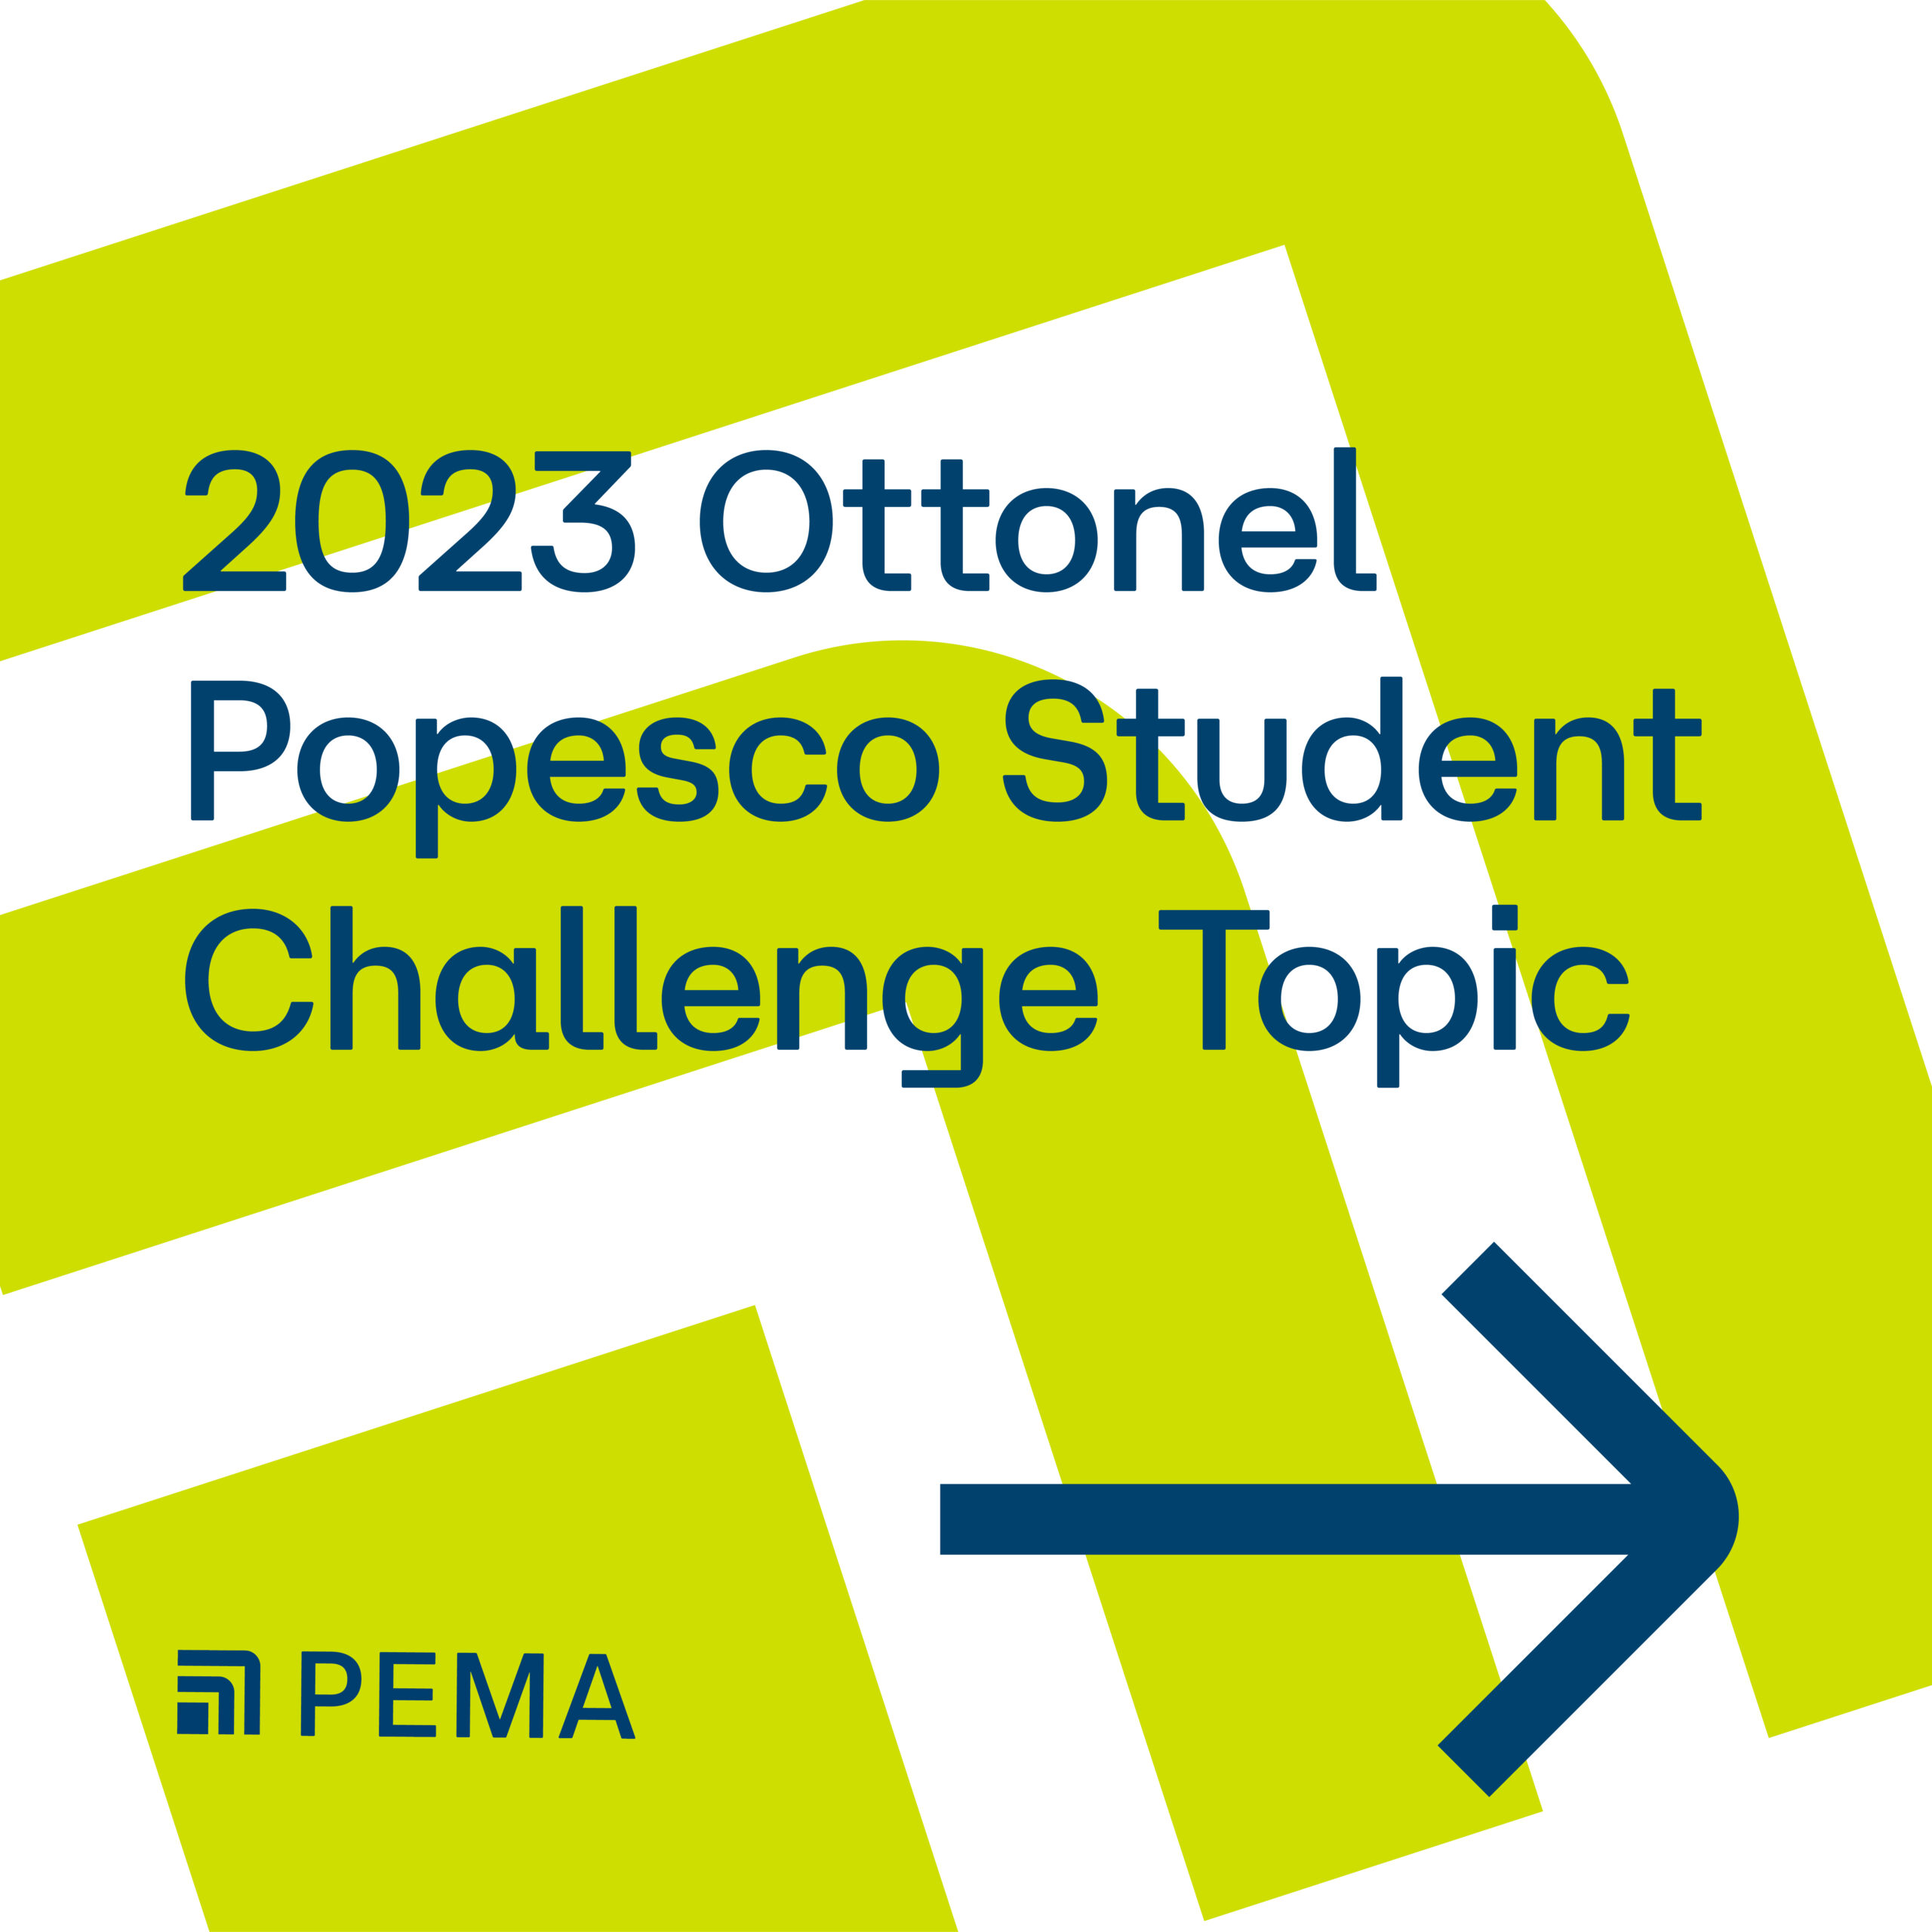 The Ottonel Popesco Student Challenge by PEMA 2023